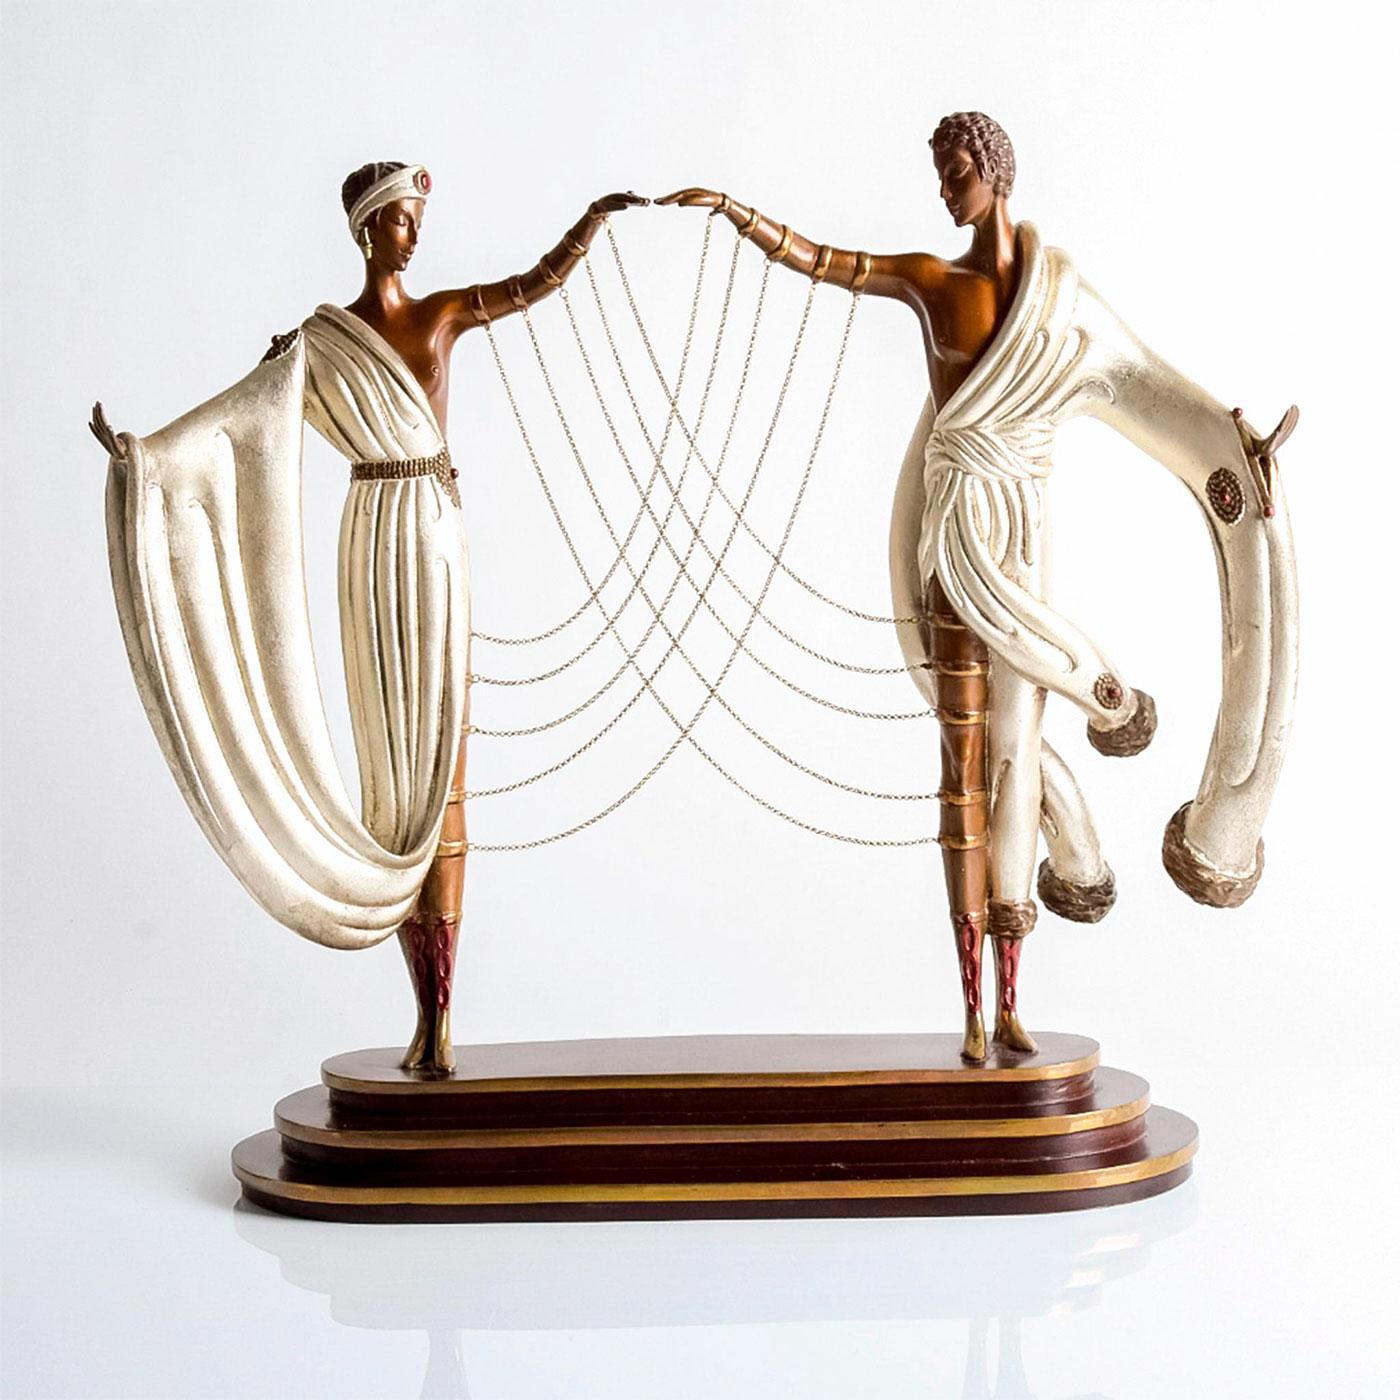 ERTE (ROMAIN DE TIRTOFF) „THE WEDDING“ BRONZE SculPTURE